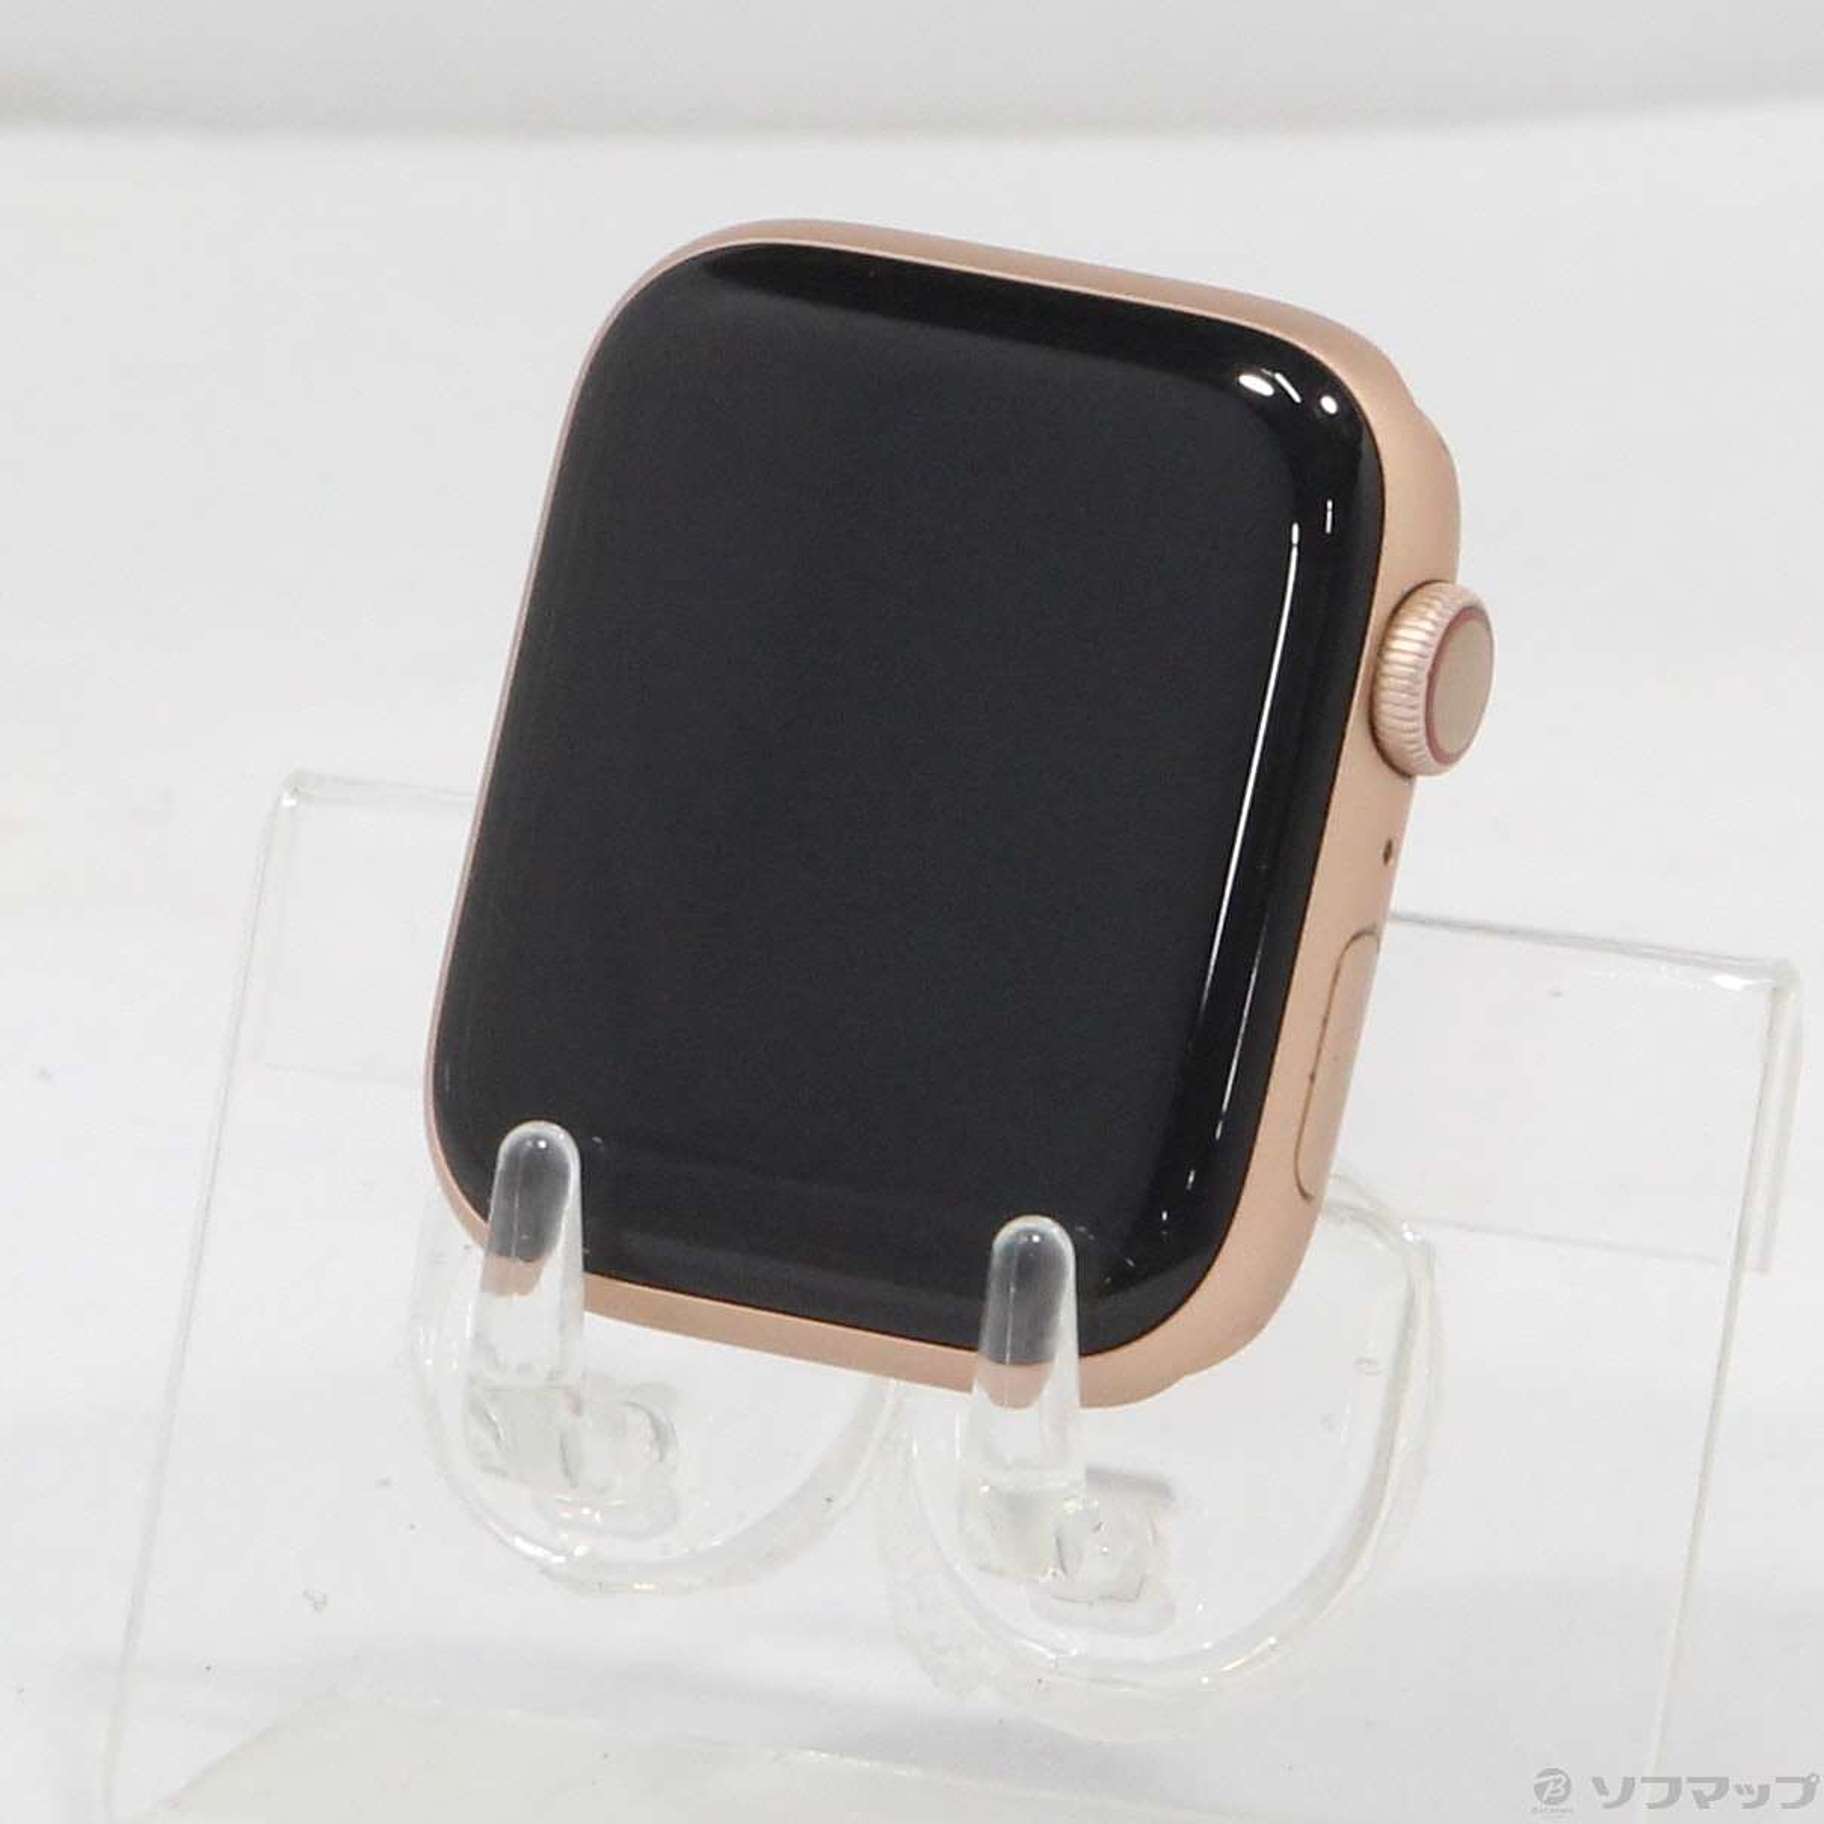 Apple Watch Series6 44mm GPS ゴールド アルミニウム